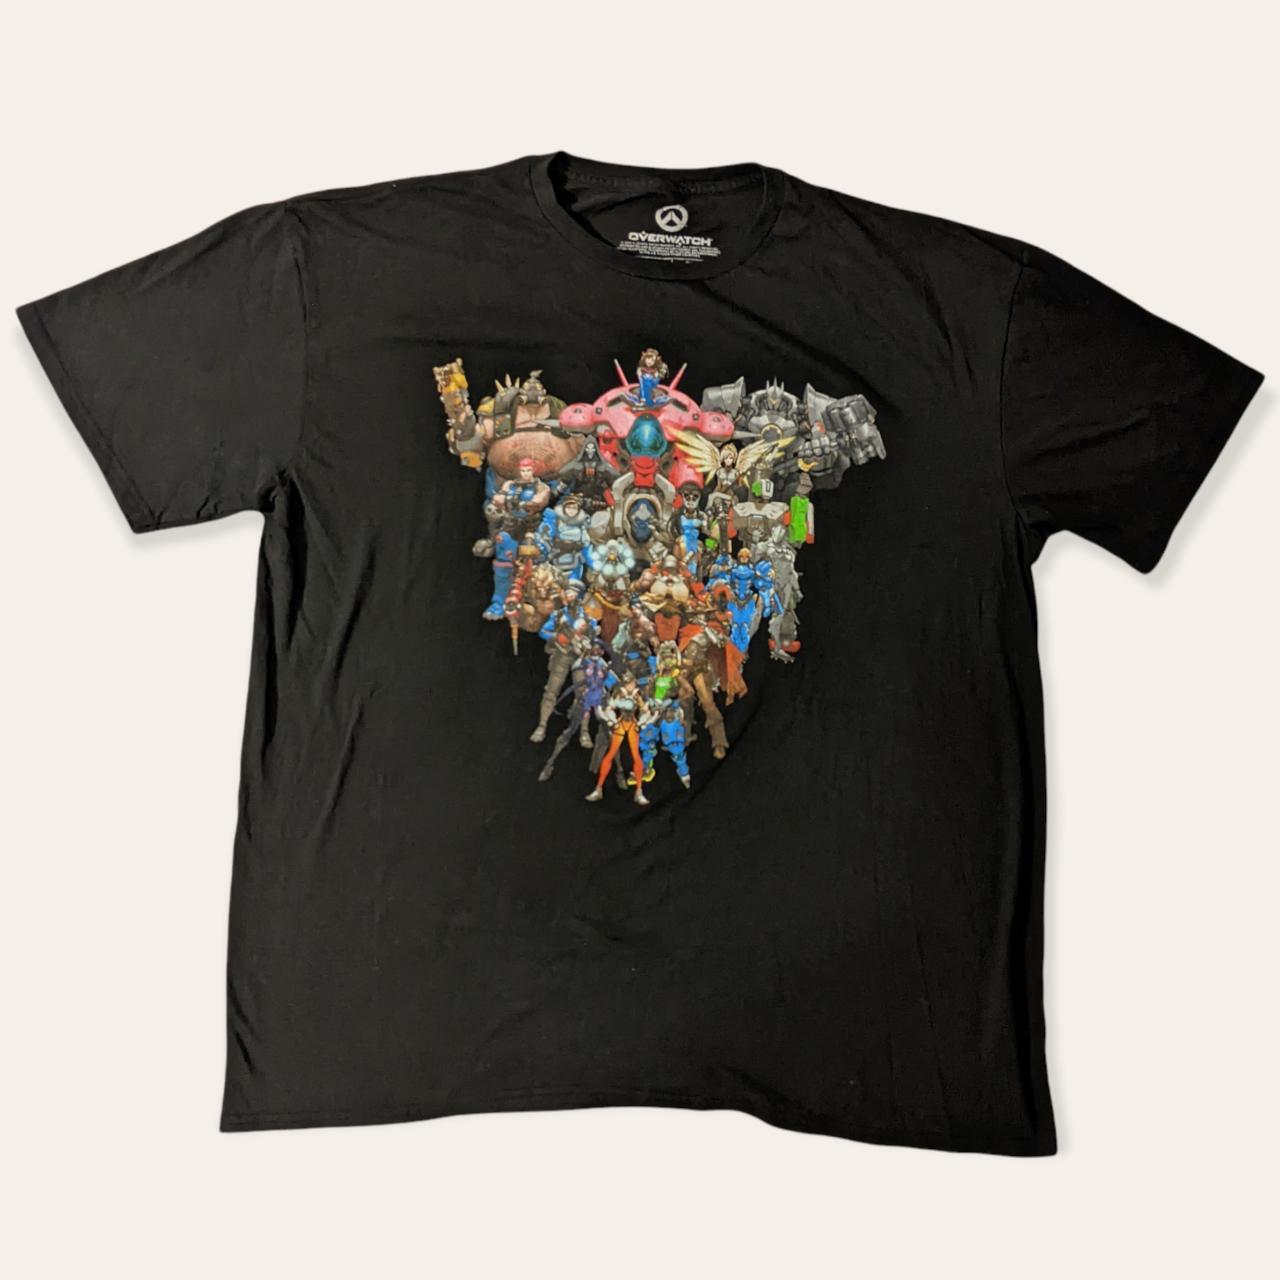 Product Image 1 - Overwatch Anniversary Black T-shirt

Size XXL
Lootwear